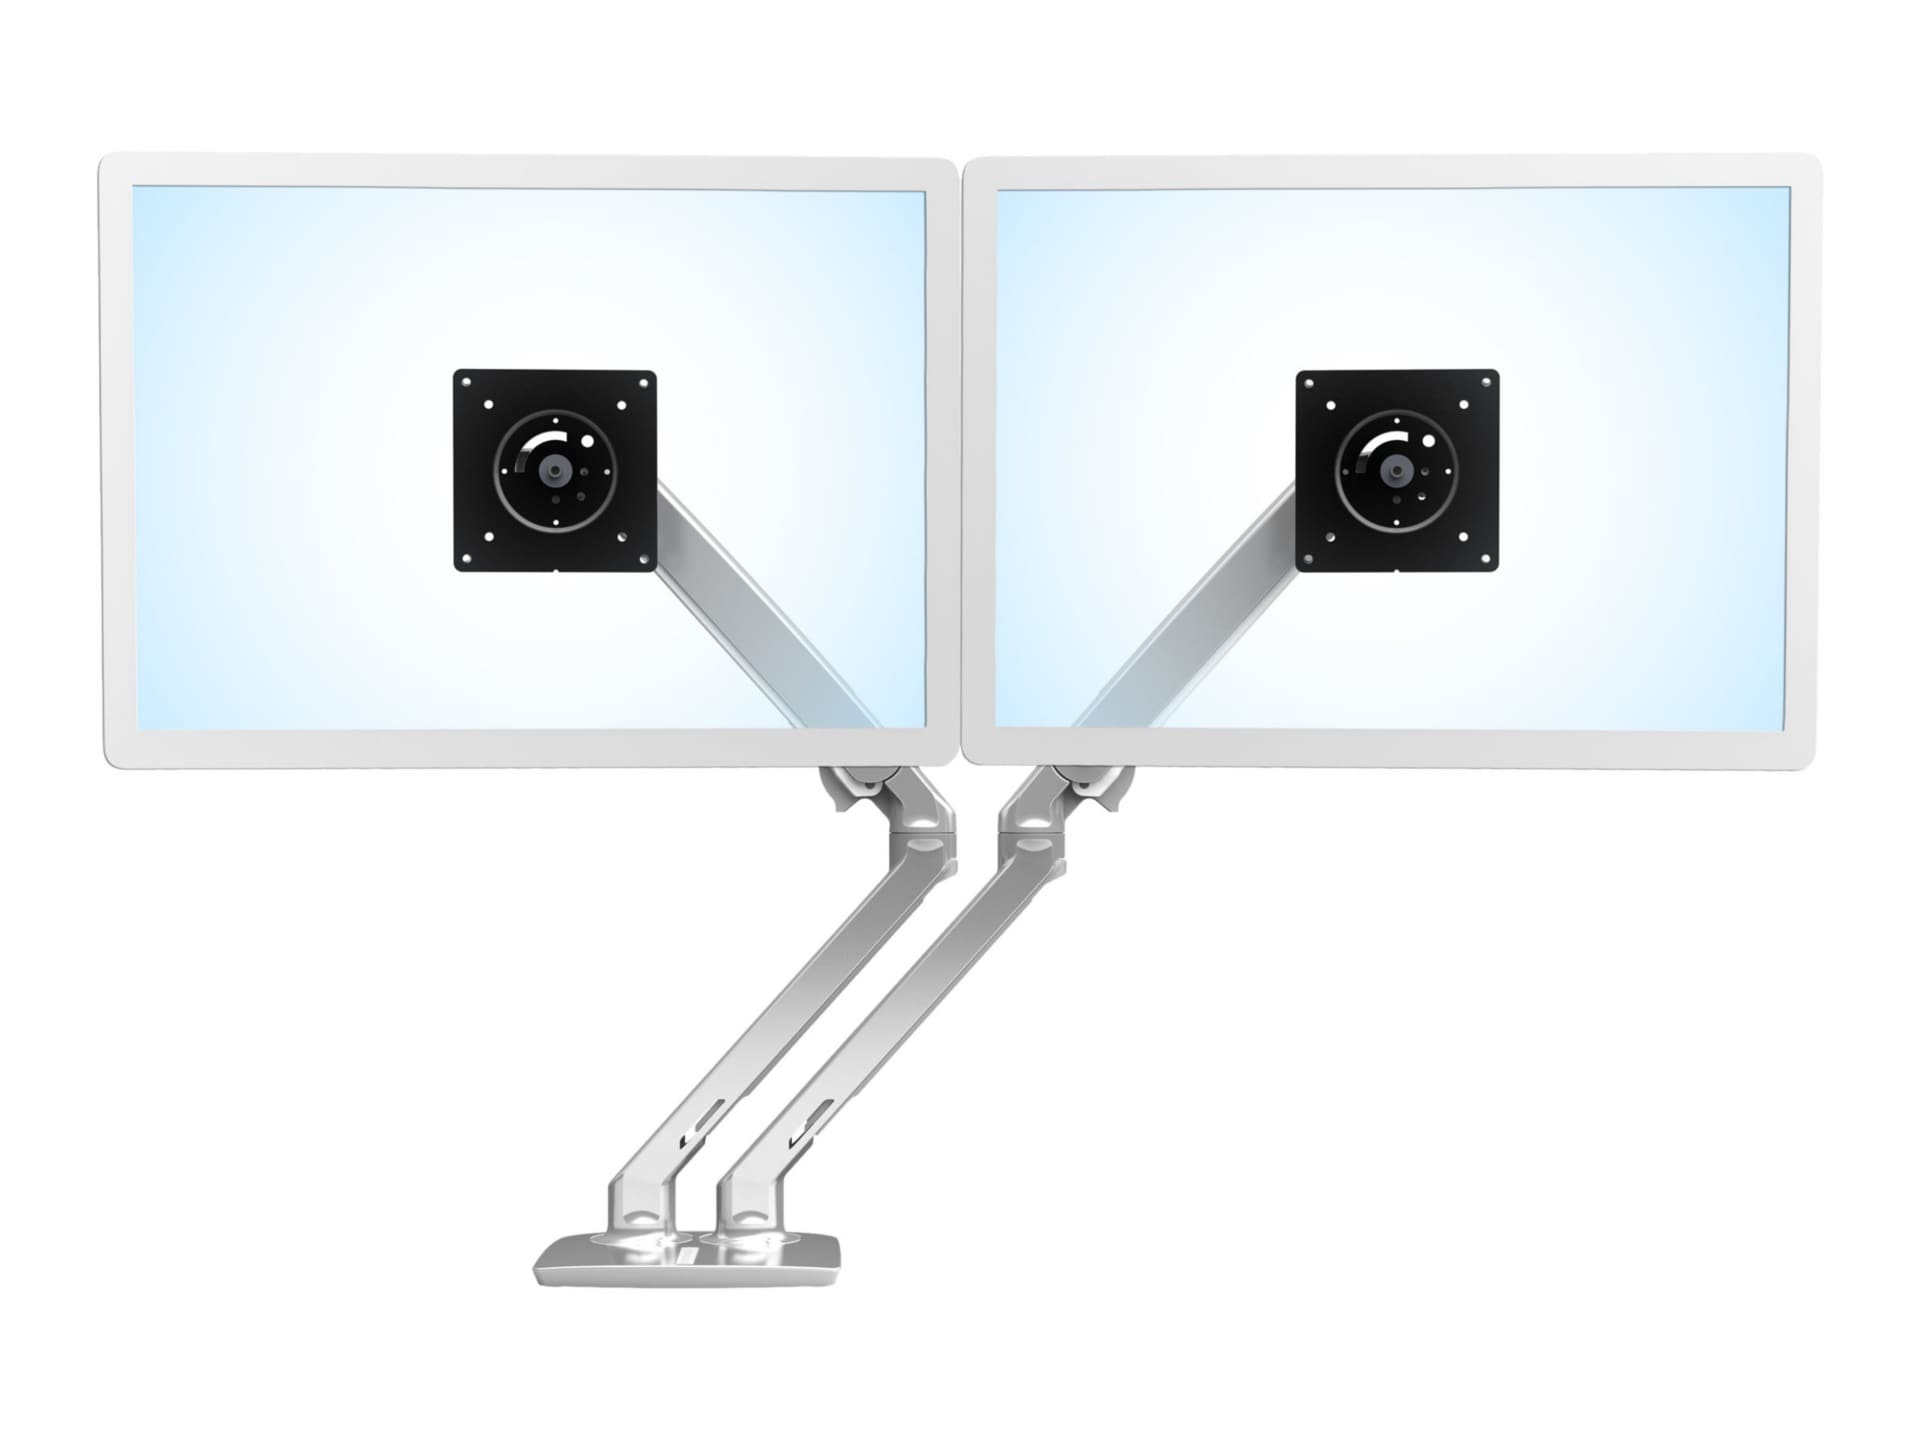 Ergotron MXV Desk Dual Monitor Arm mounting kit - for 2 monitors - polished